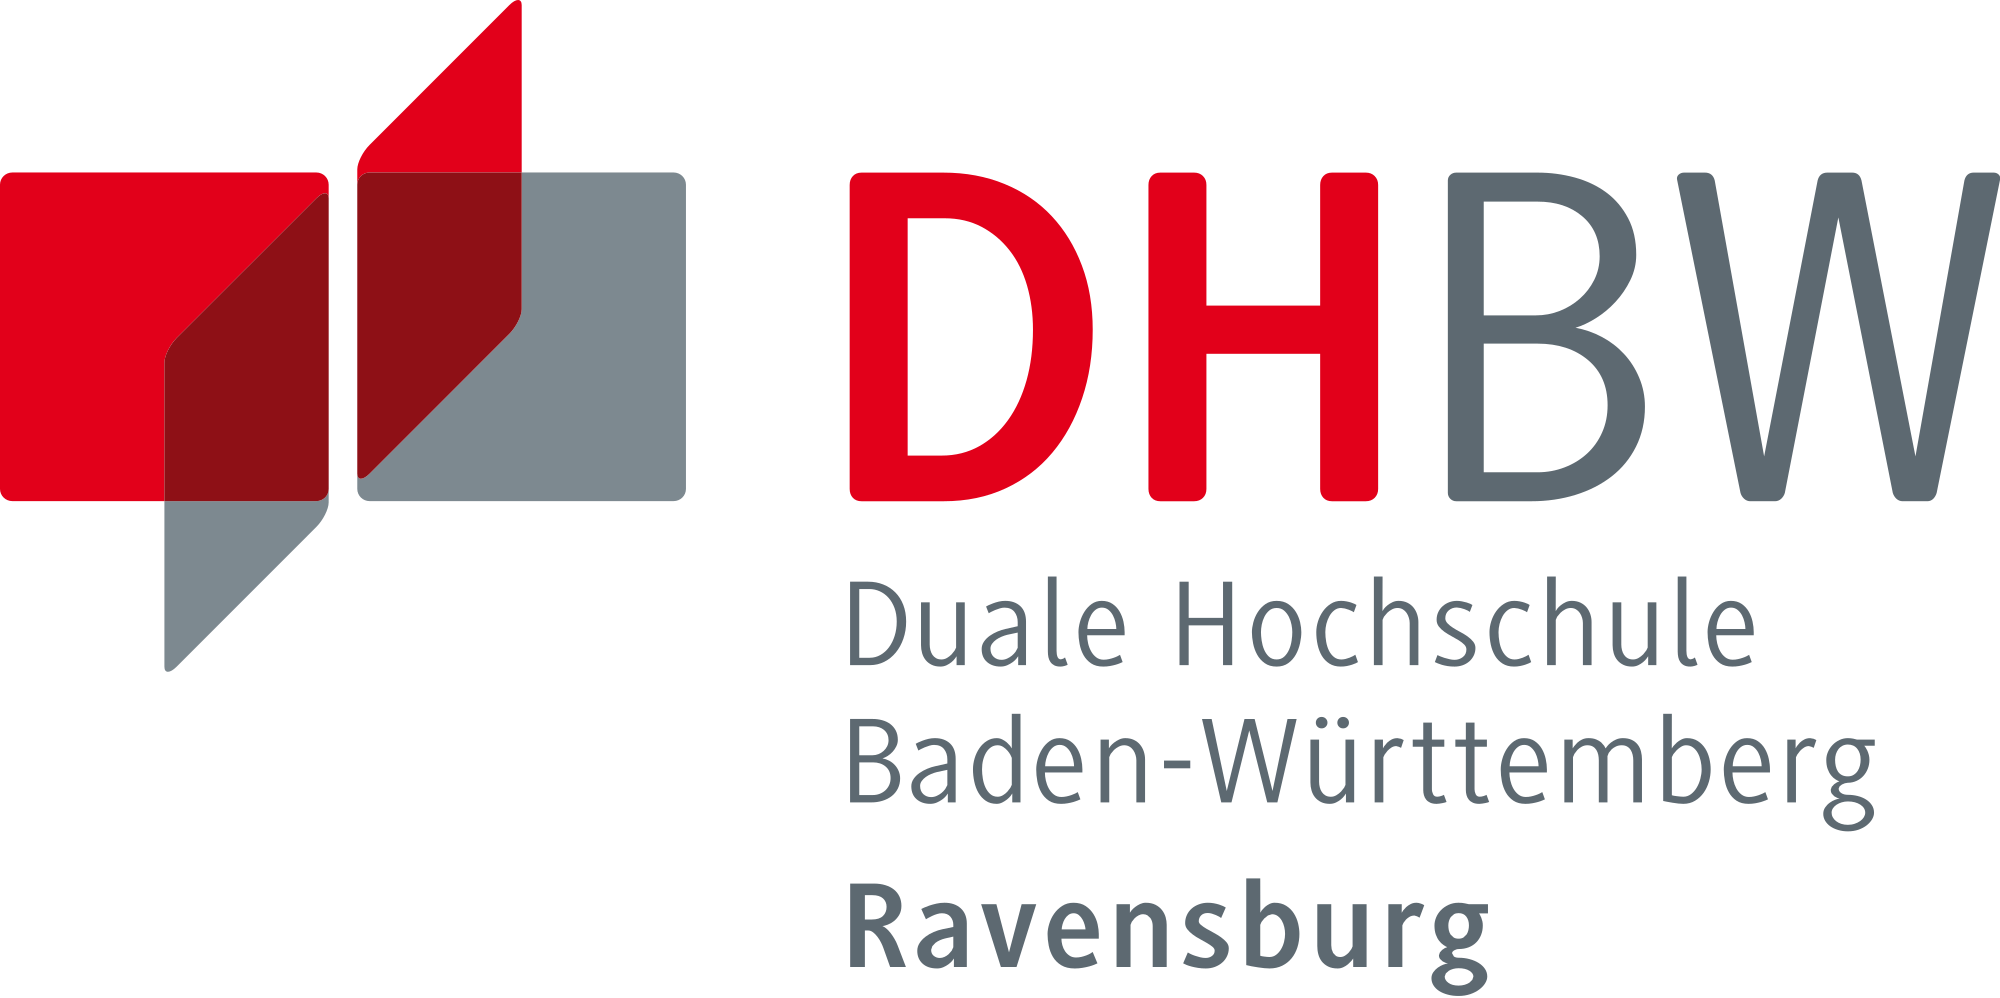 DHBW Ravensburg